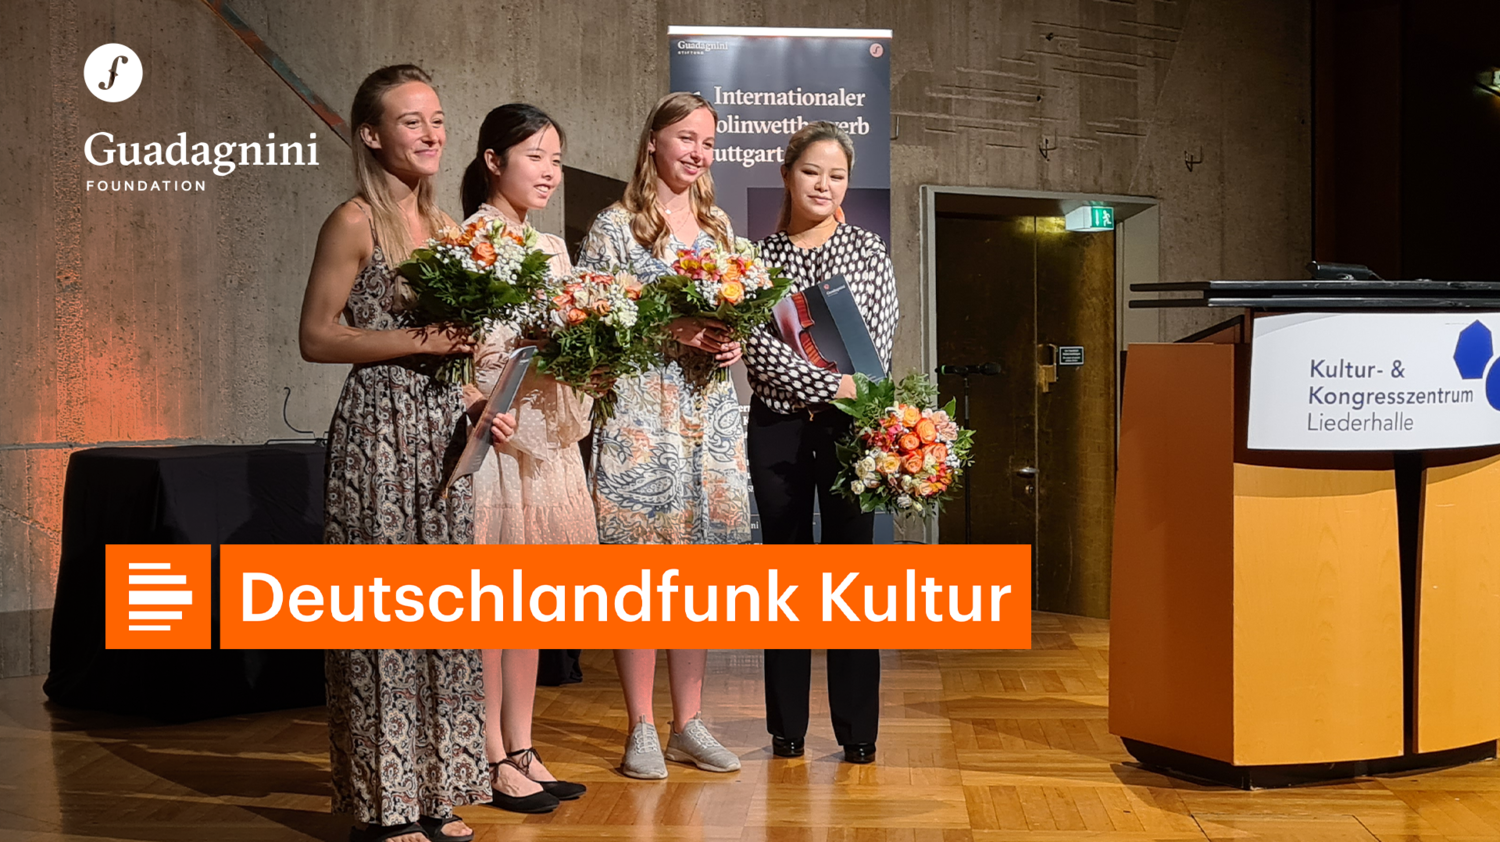 Radio contribution - Deutschlandfunk Kultur